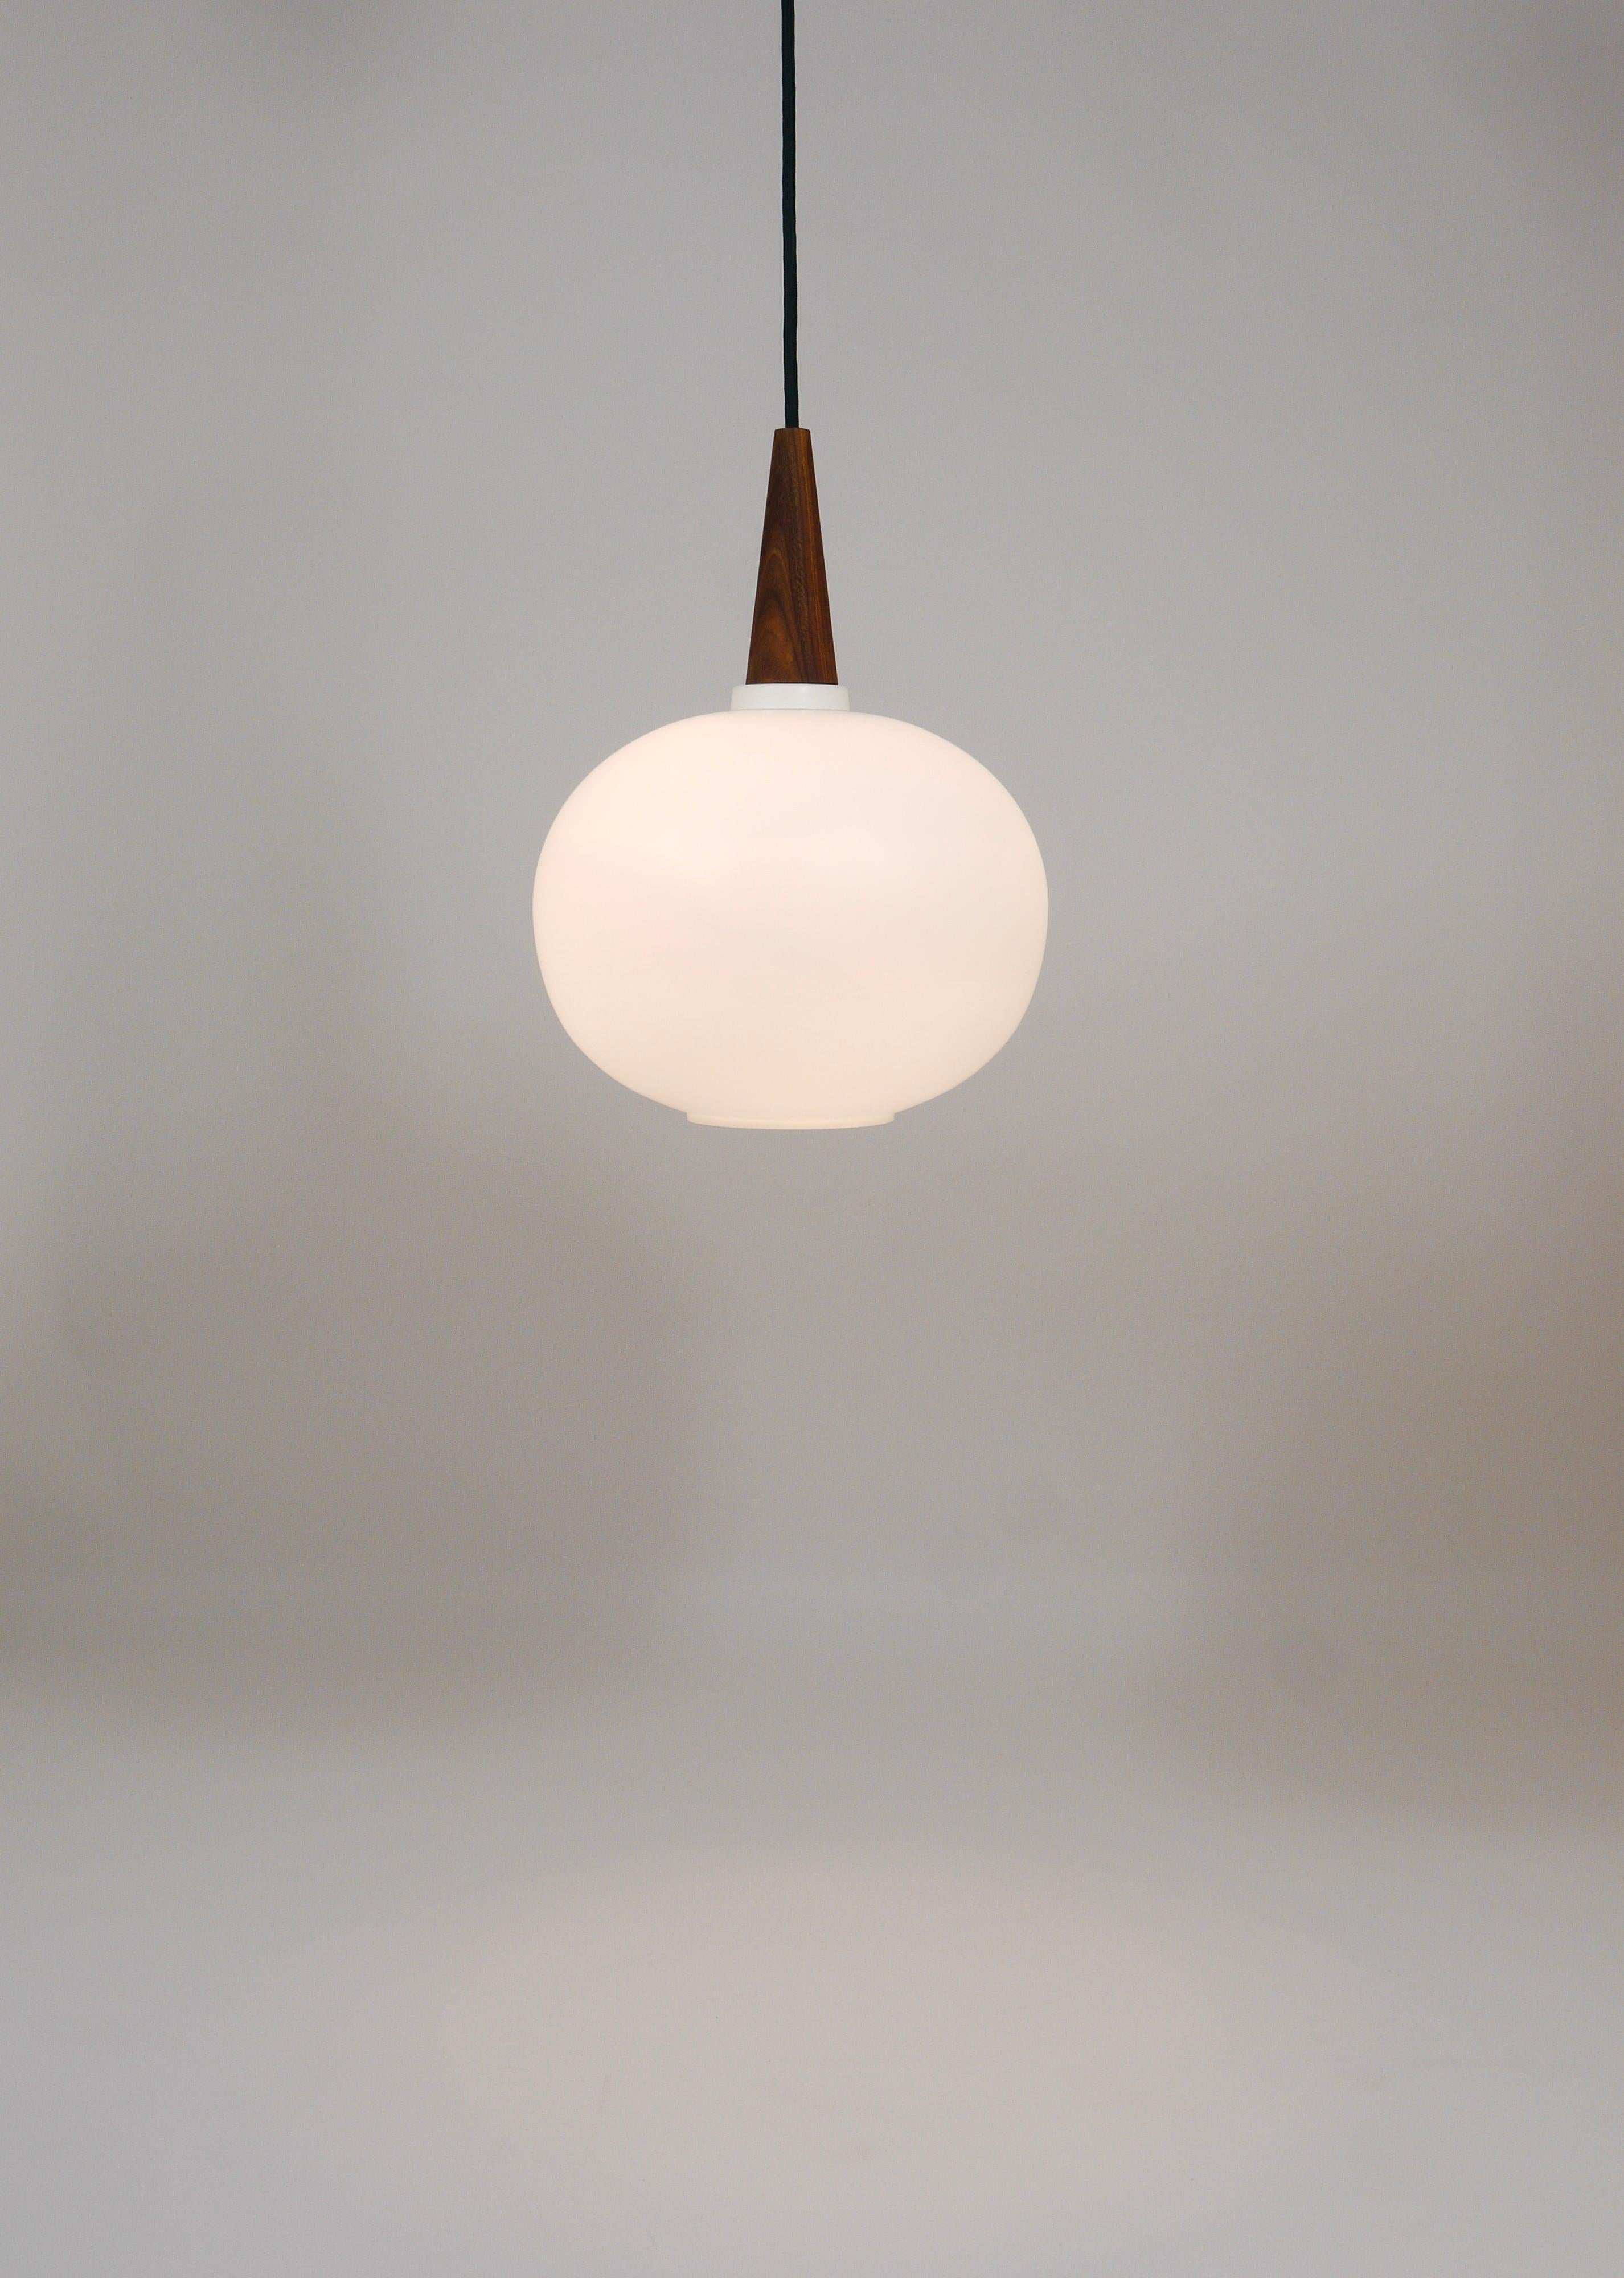 Louis Kalff Teak & Opaline Pendant Suspension Lamp, Philips, Netherlands For Sale 6